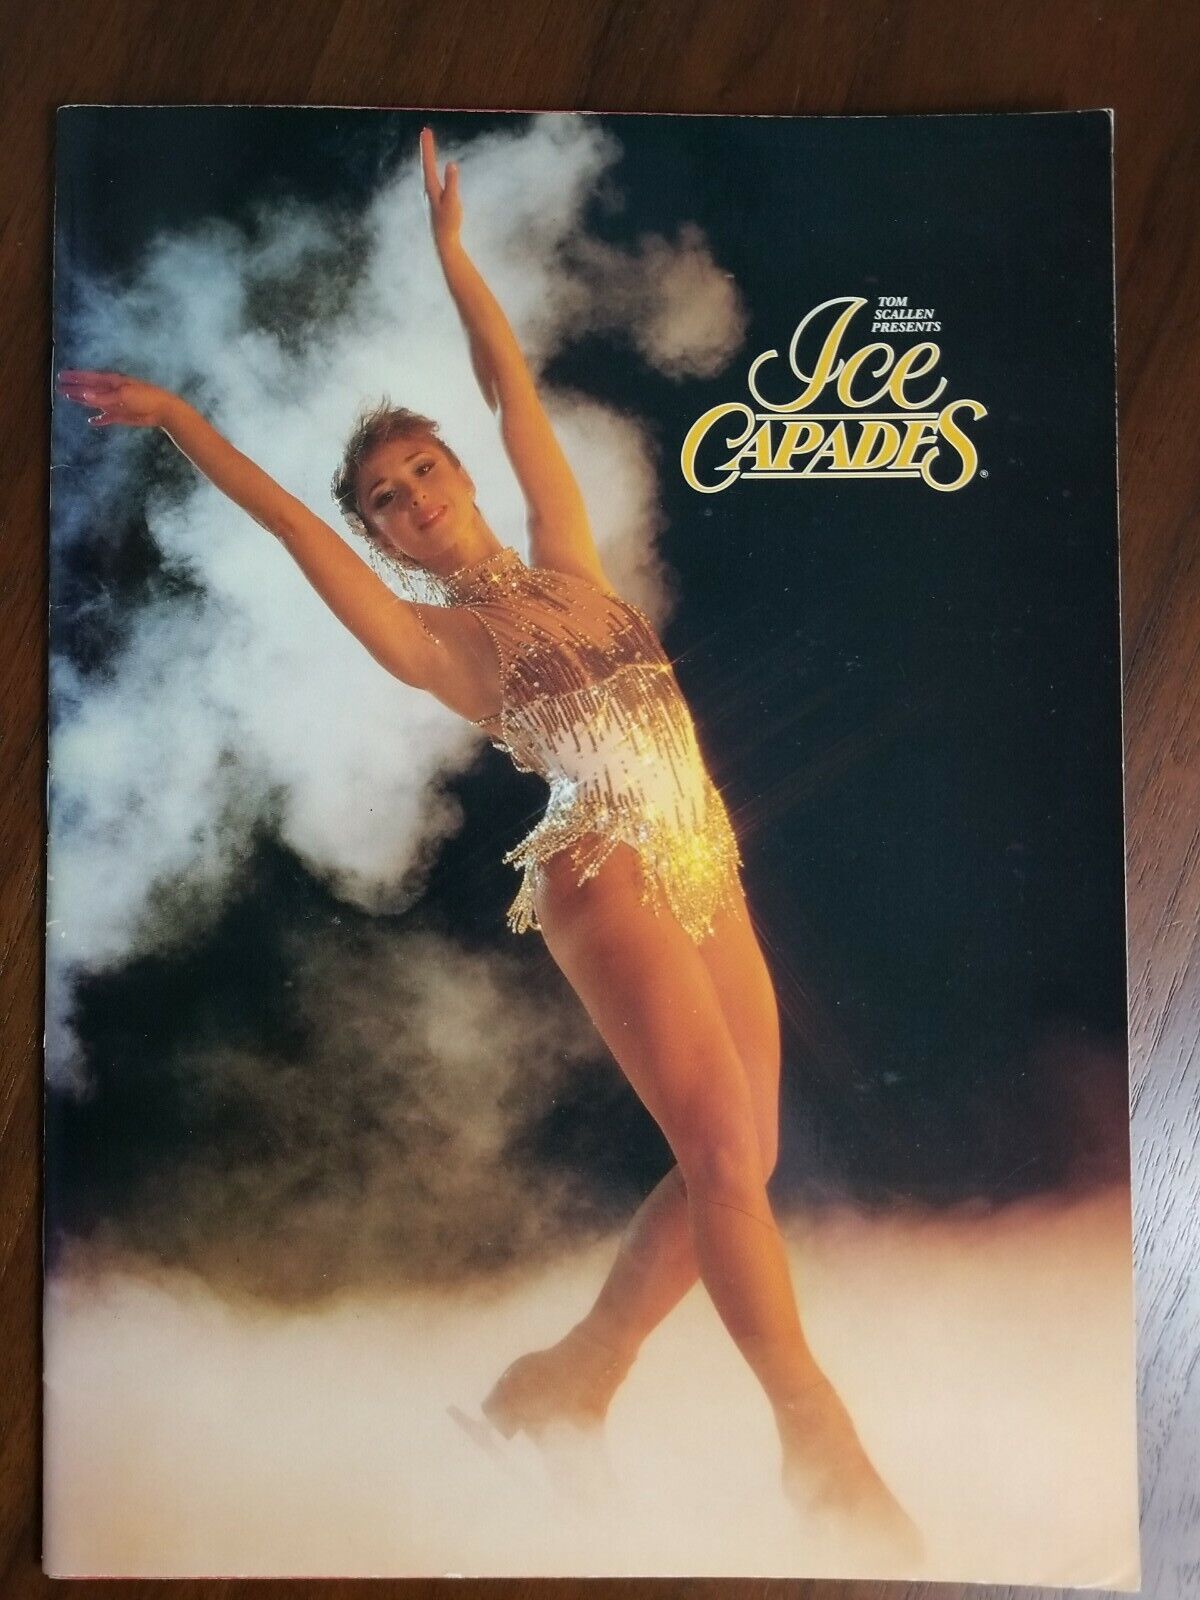 1988 Press Photo Act Book Ace Capades Ice Skating - Tom Scallen